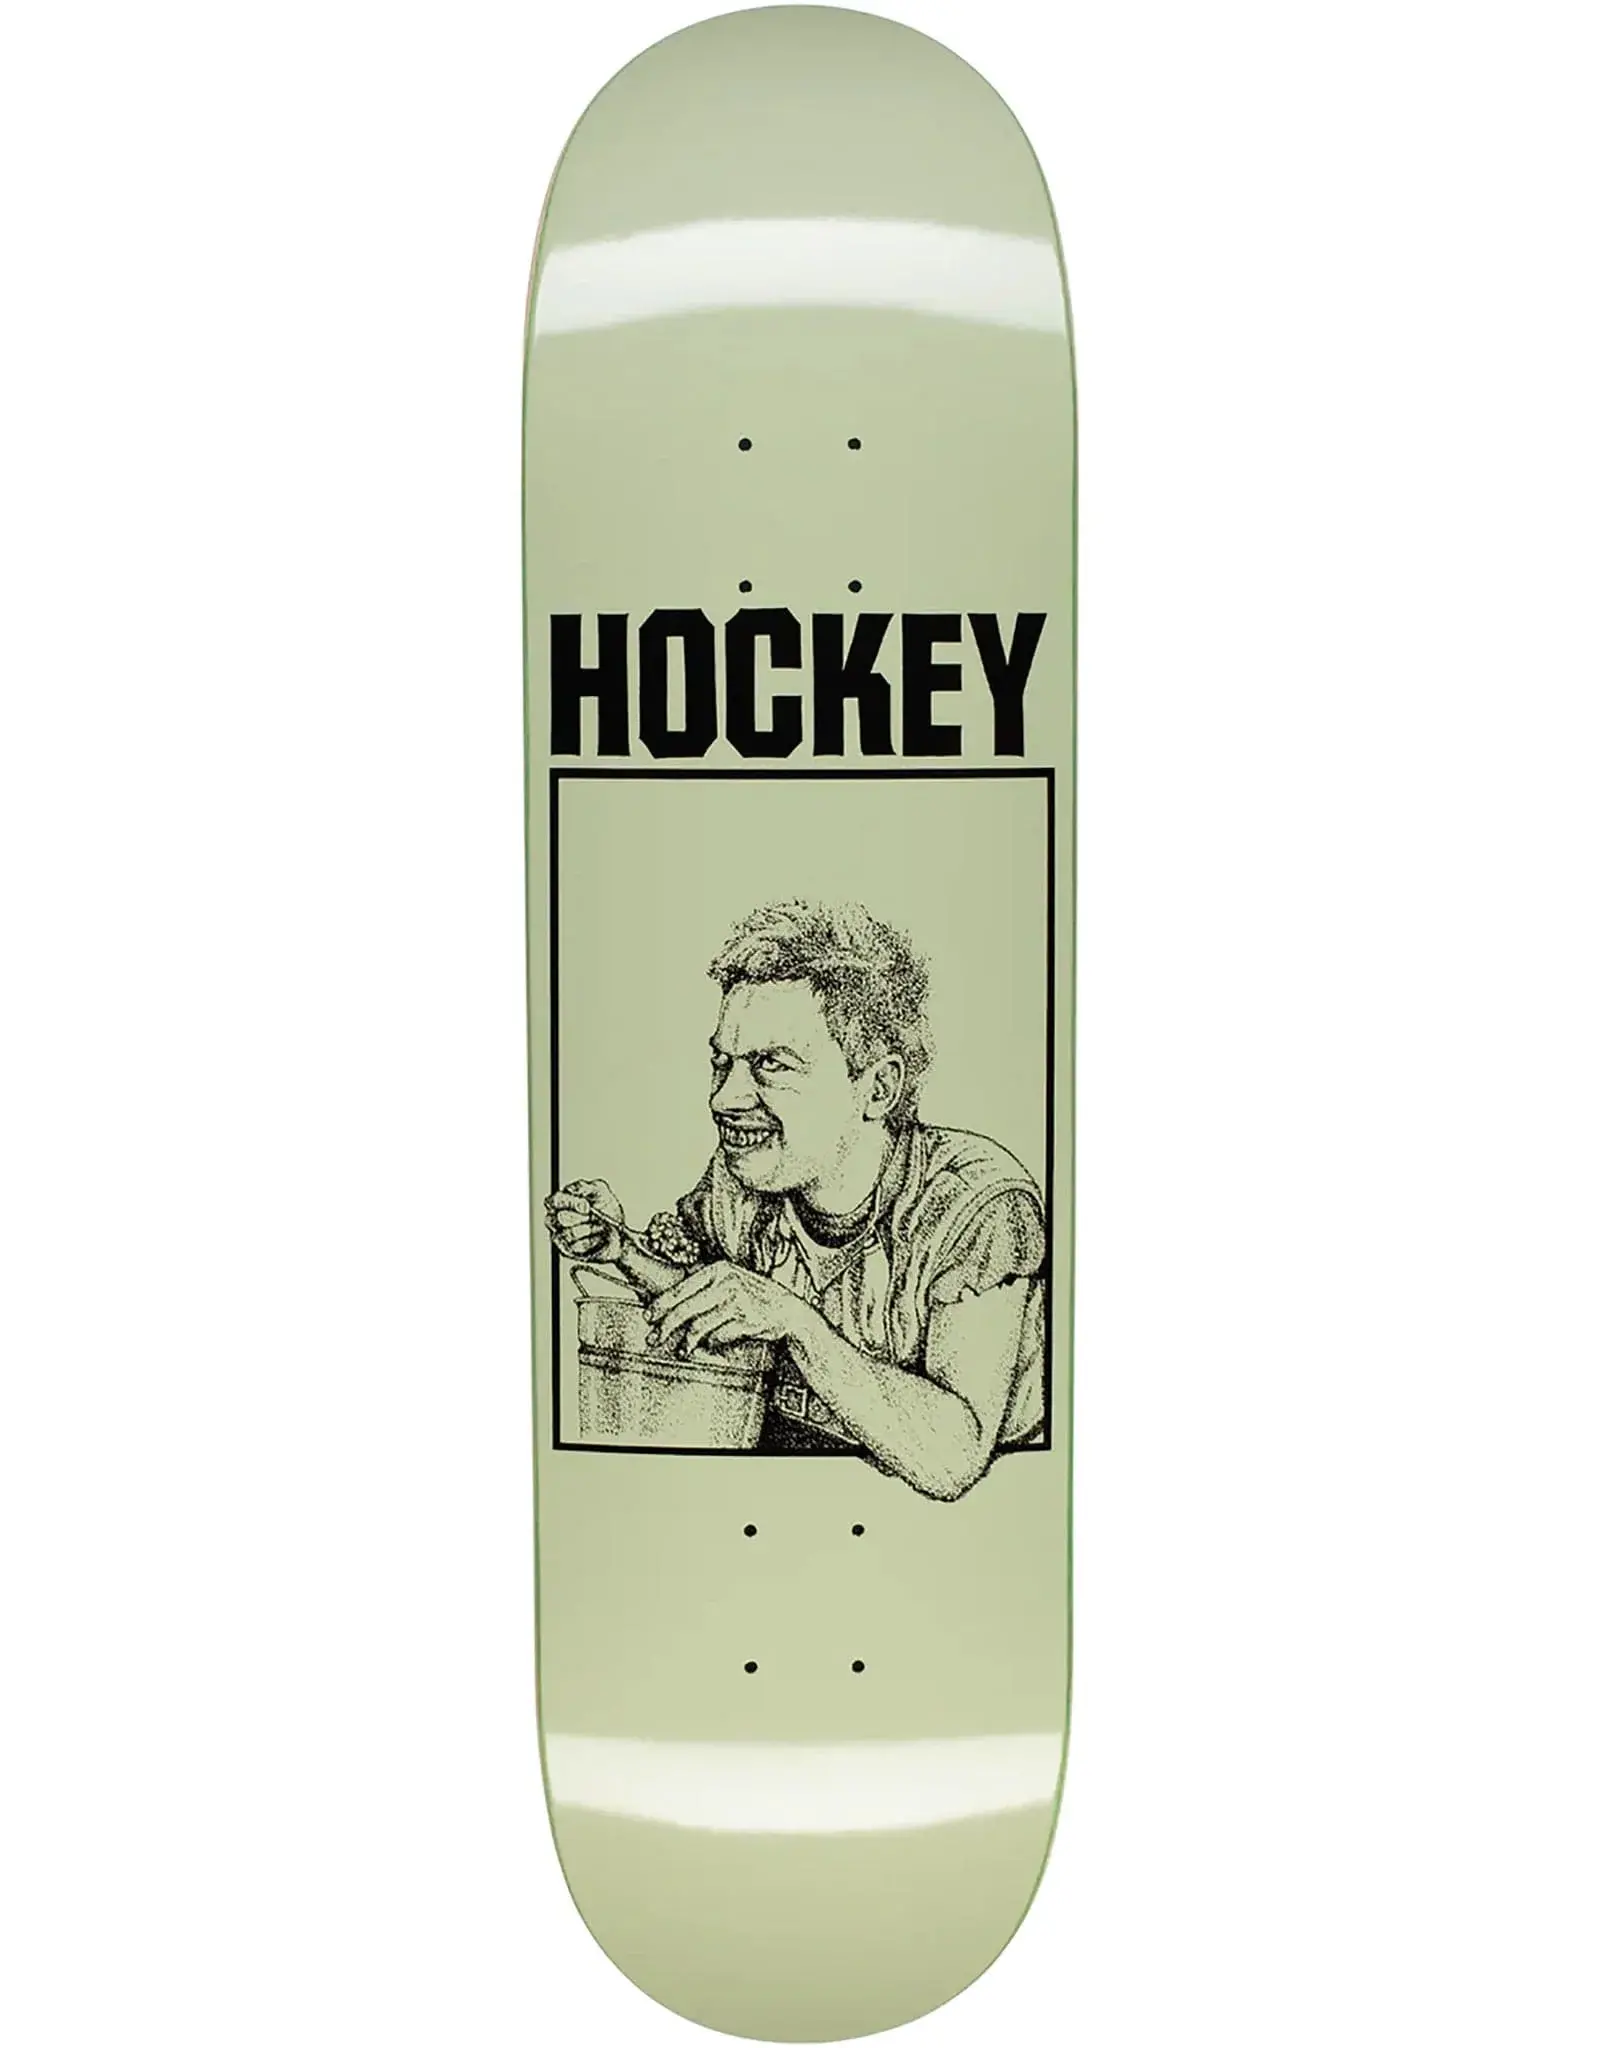 HOCKEY SKATEBOARD DECKS HOCKEY - BUCKET BOY 8.38